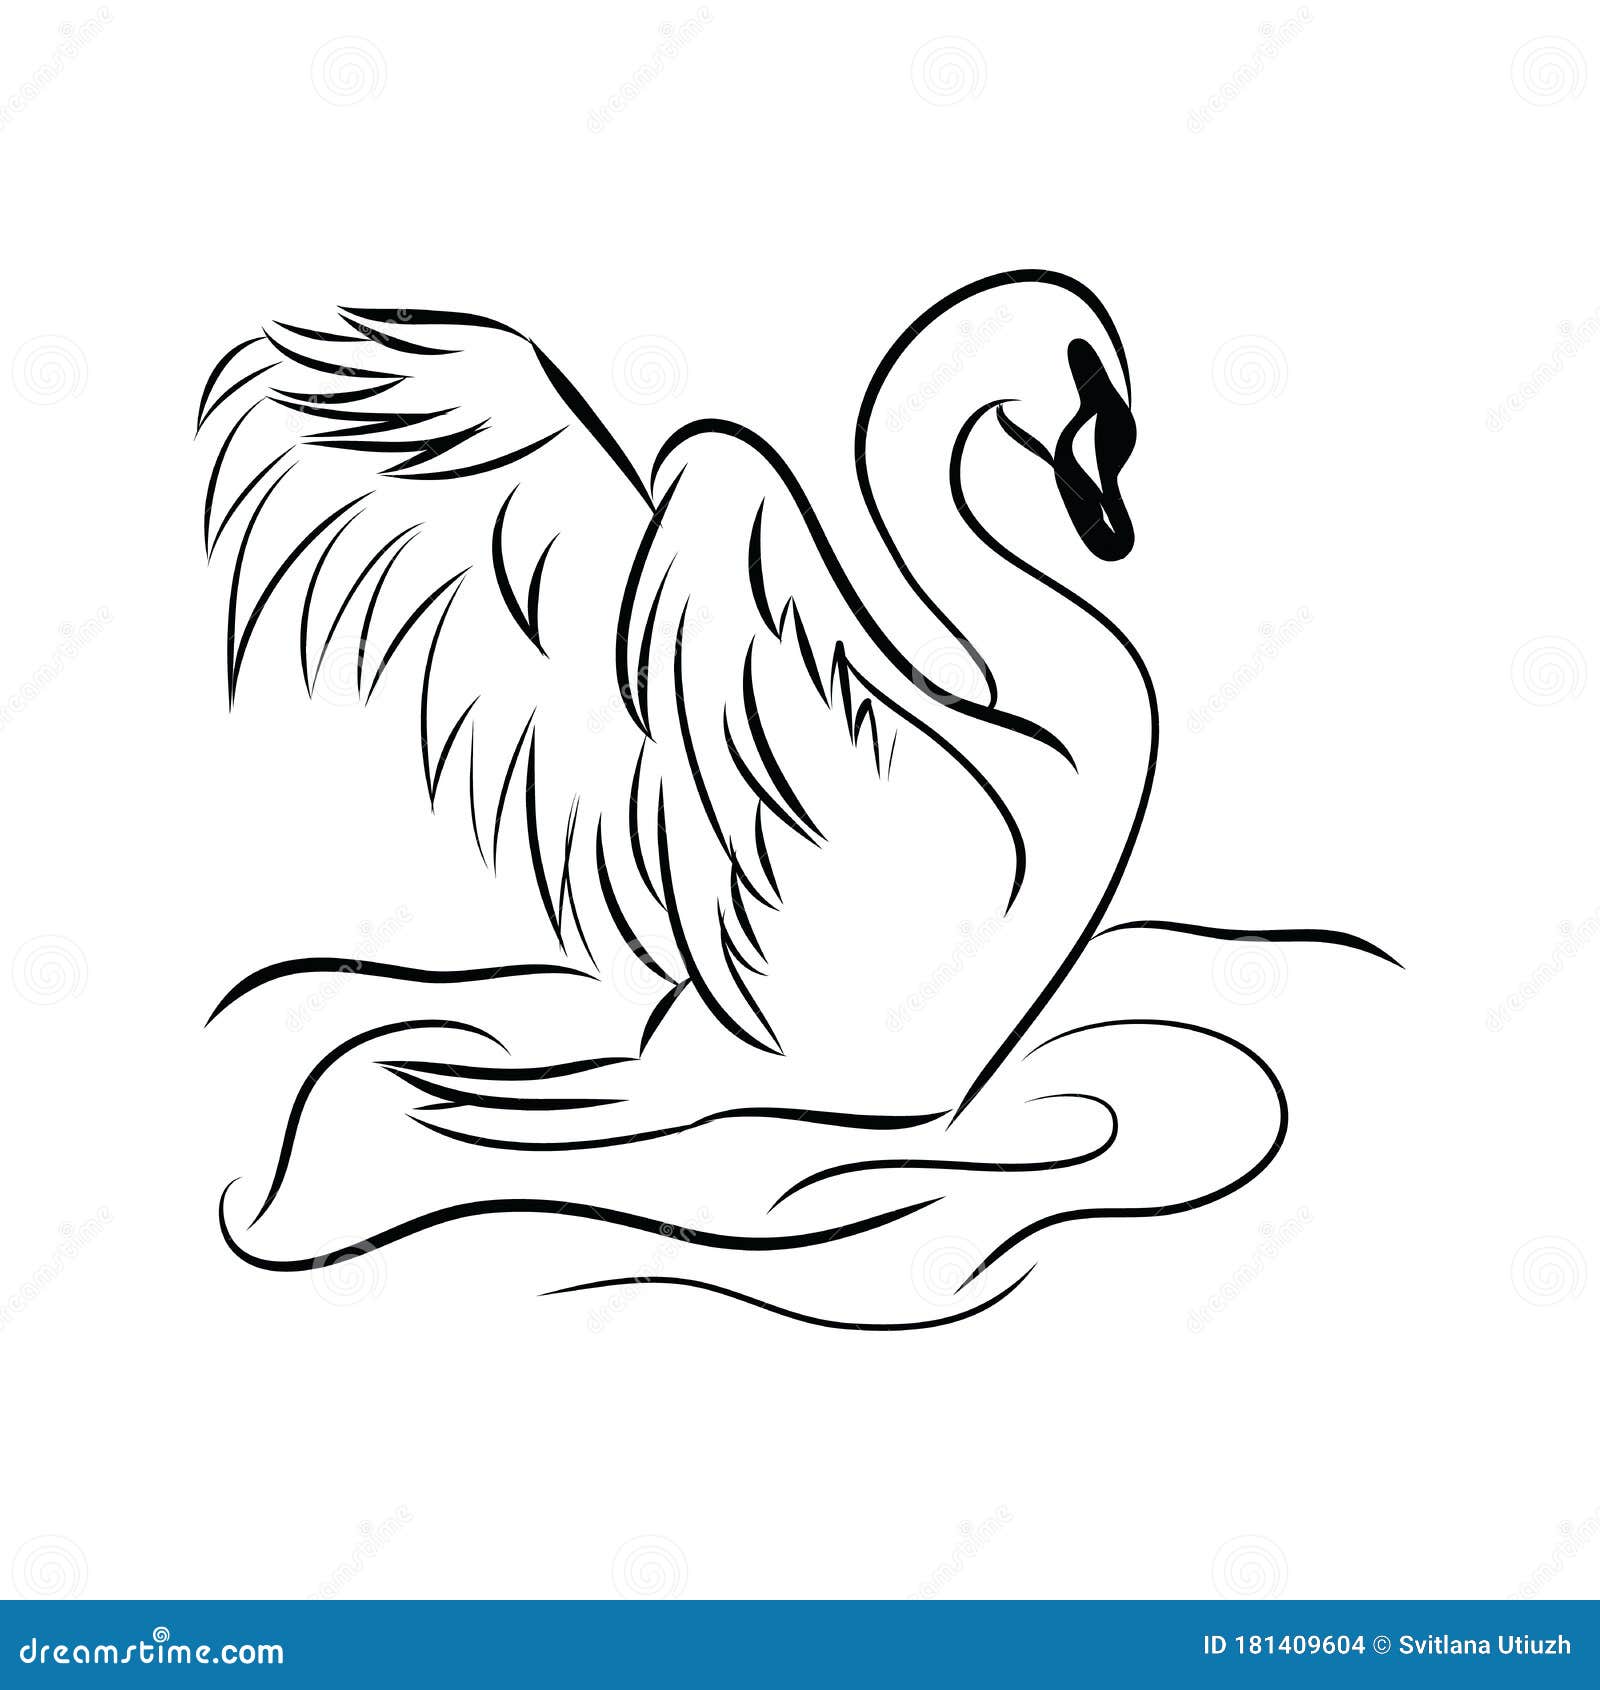 Swan Black White Bird Isolated Illustration Vector, Hand Draw, Sketch Stock Vector - Illustration of black: 181409604